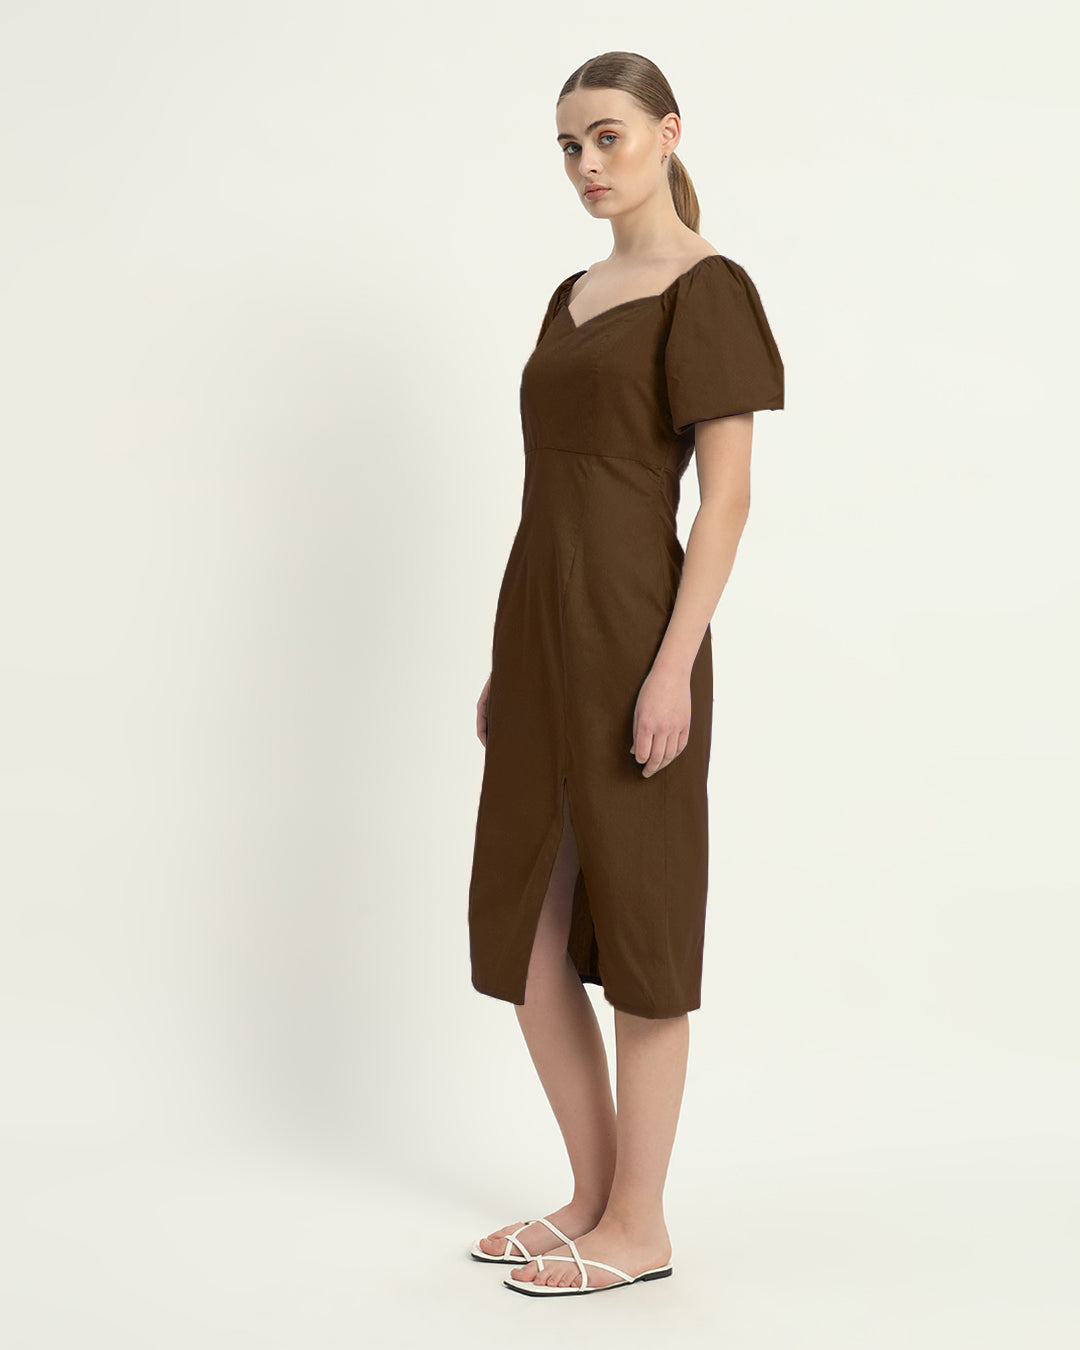 The Nutshell Erwin Cotton Dress